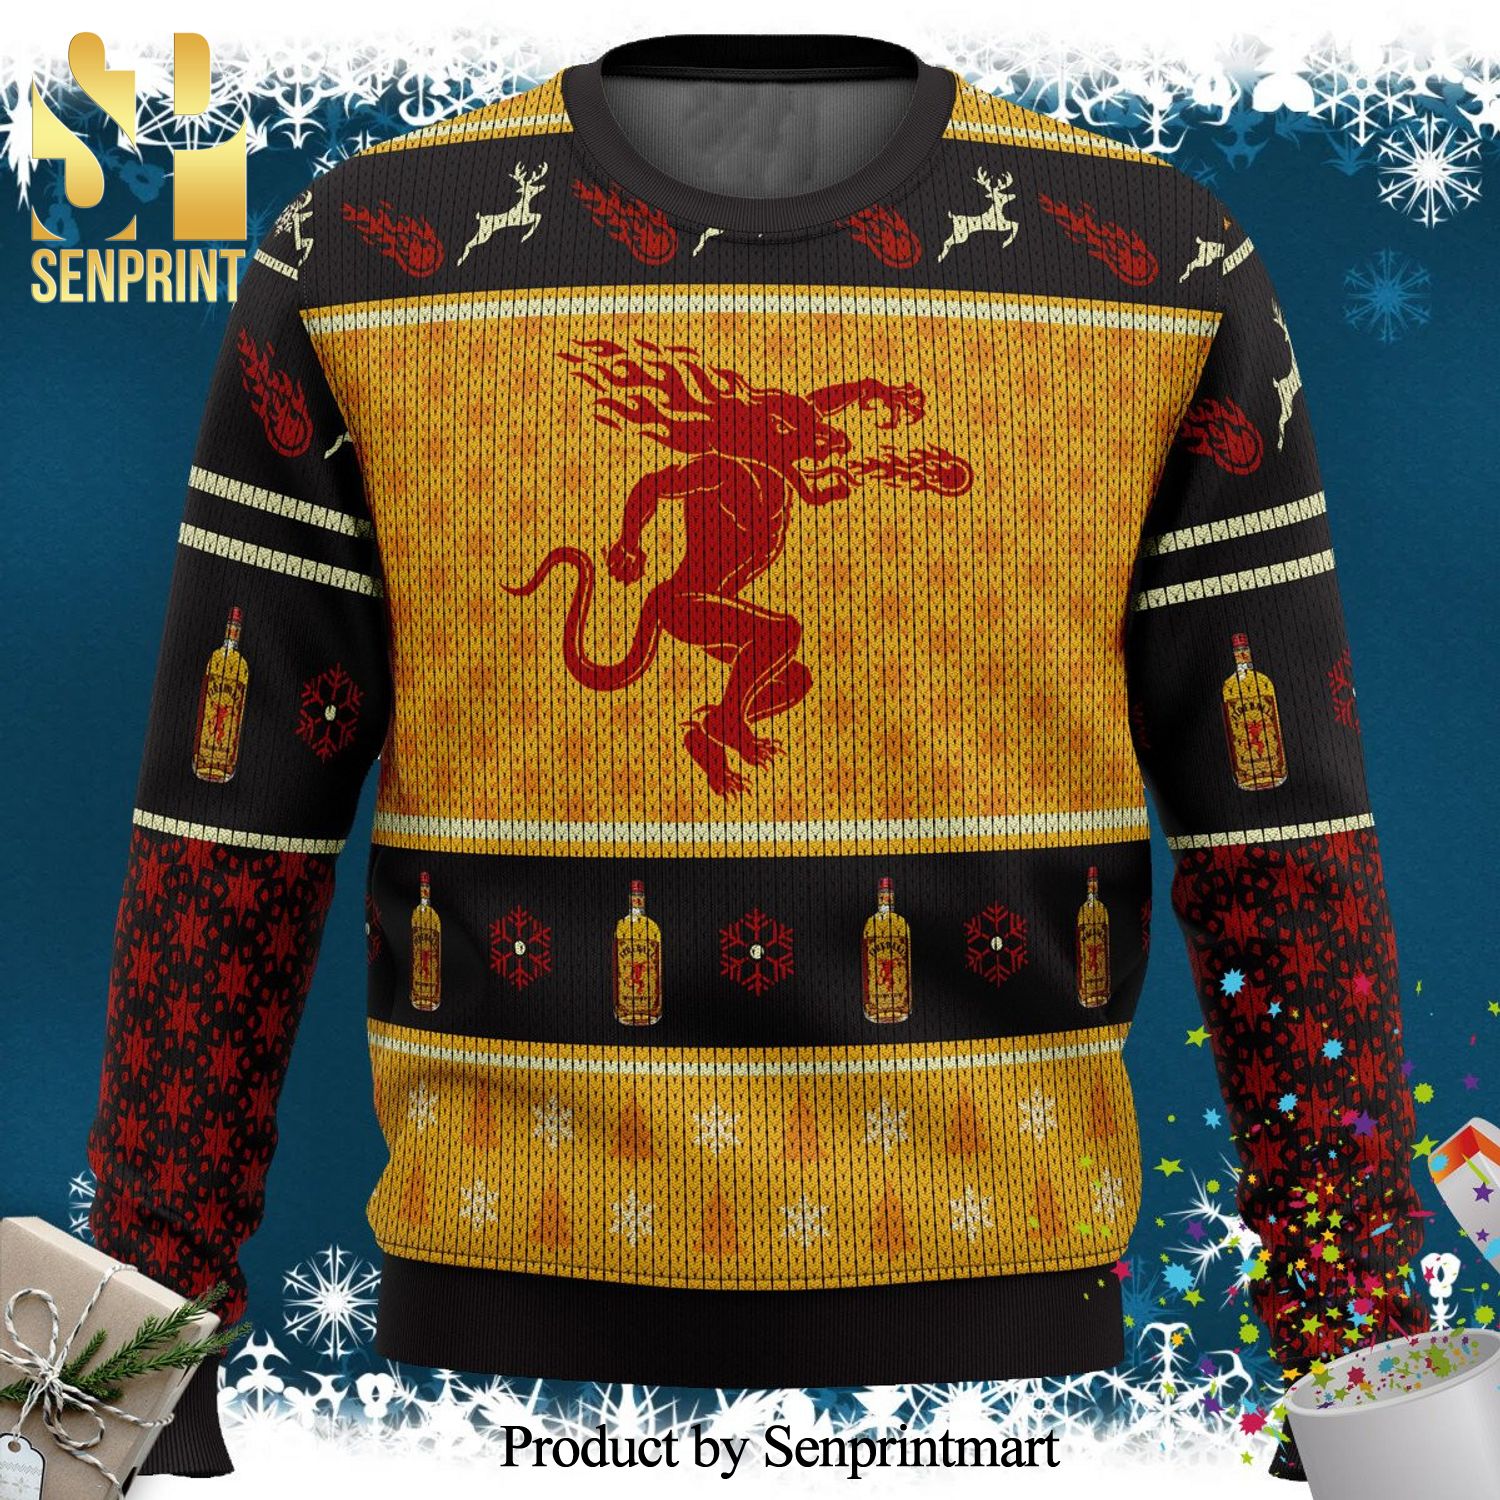 Fireball Cinnamon Whisky Logo Knitted Ugly Christmas Sweater